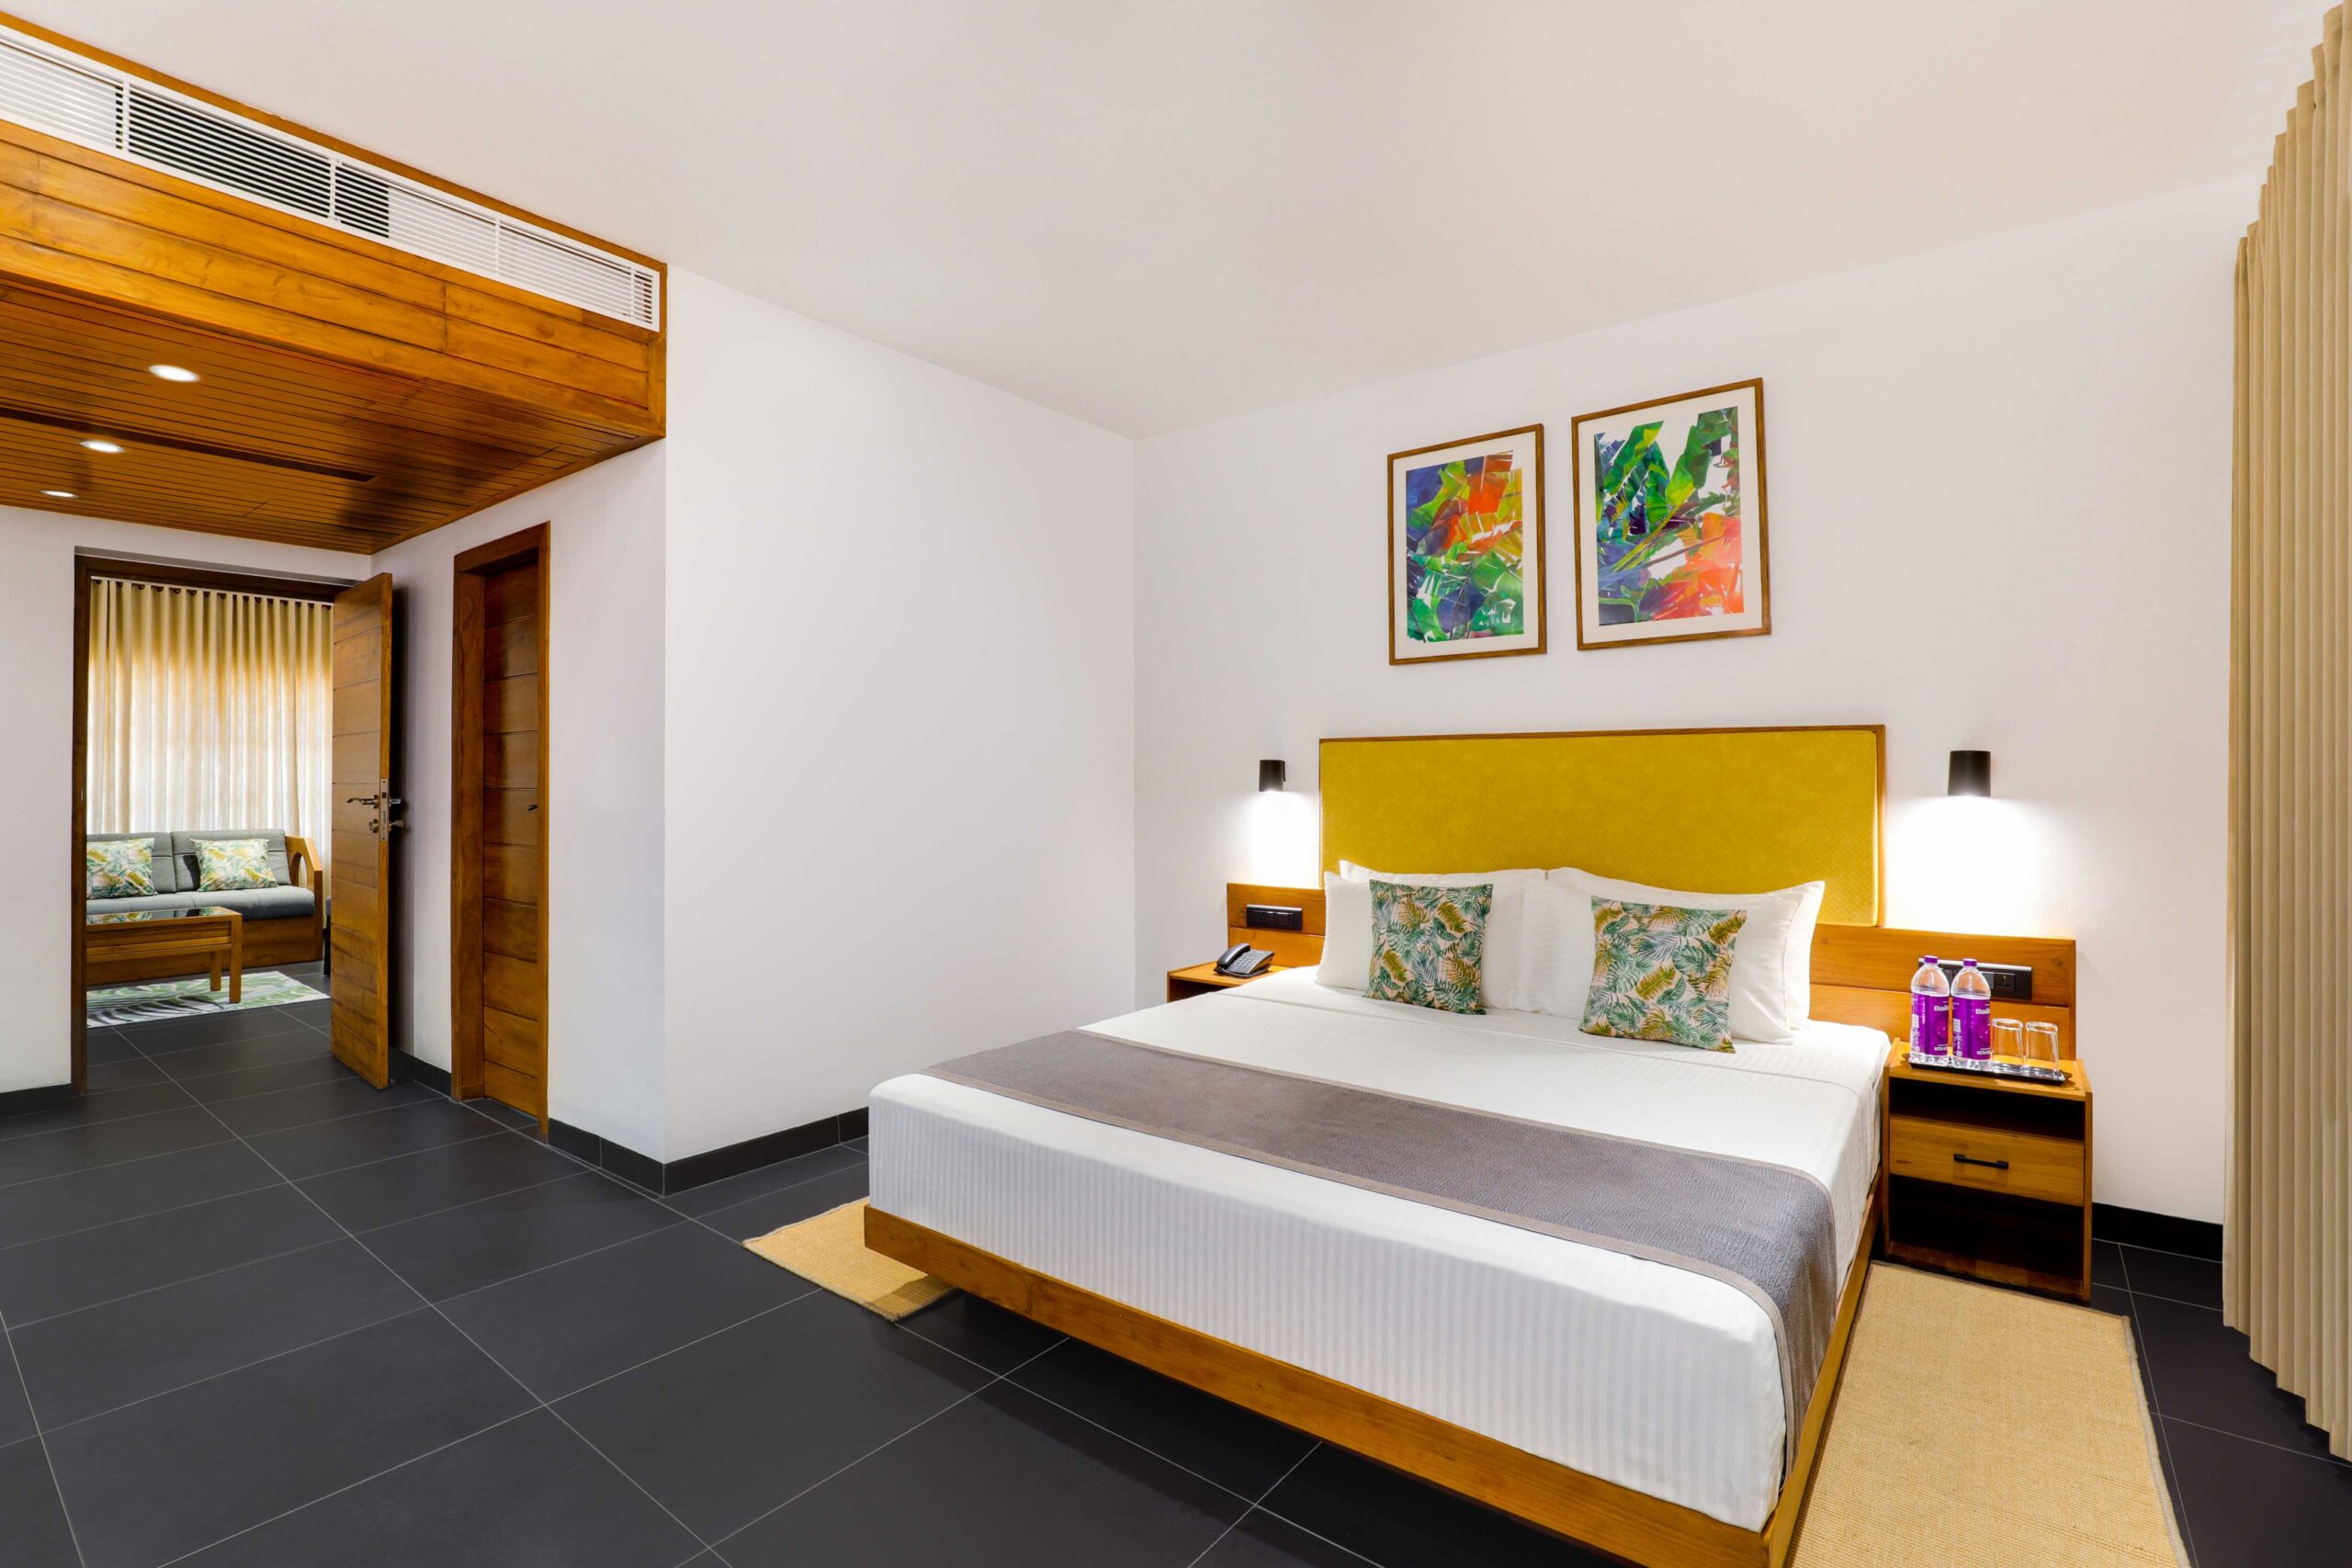 Lemon Tree Hotels launches its fifth property in Kerala with Keys Prima by Lemon Tree Hotels, Thekkady